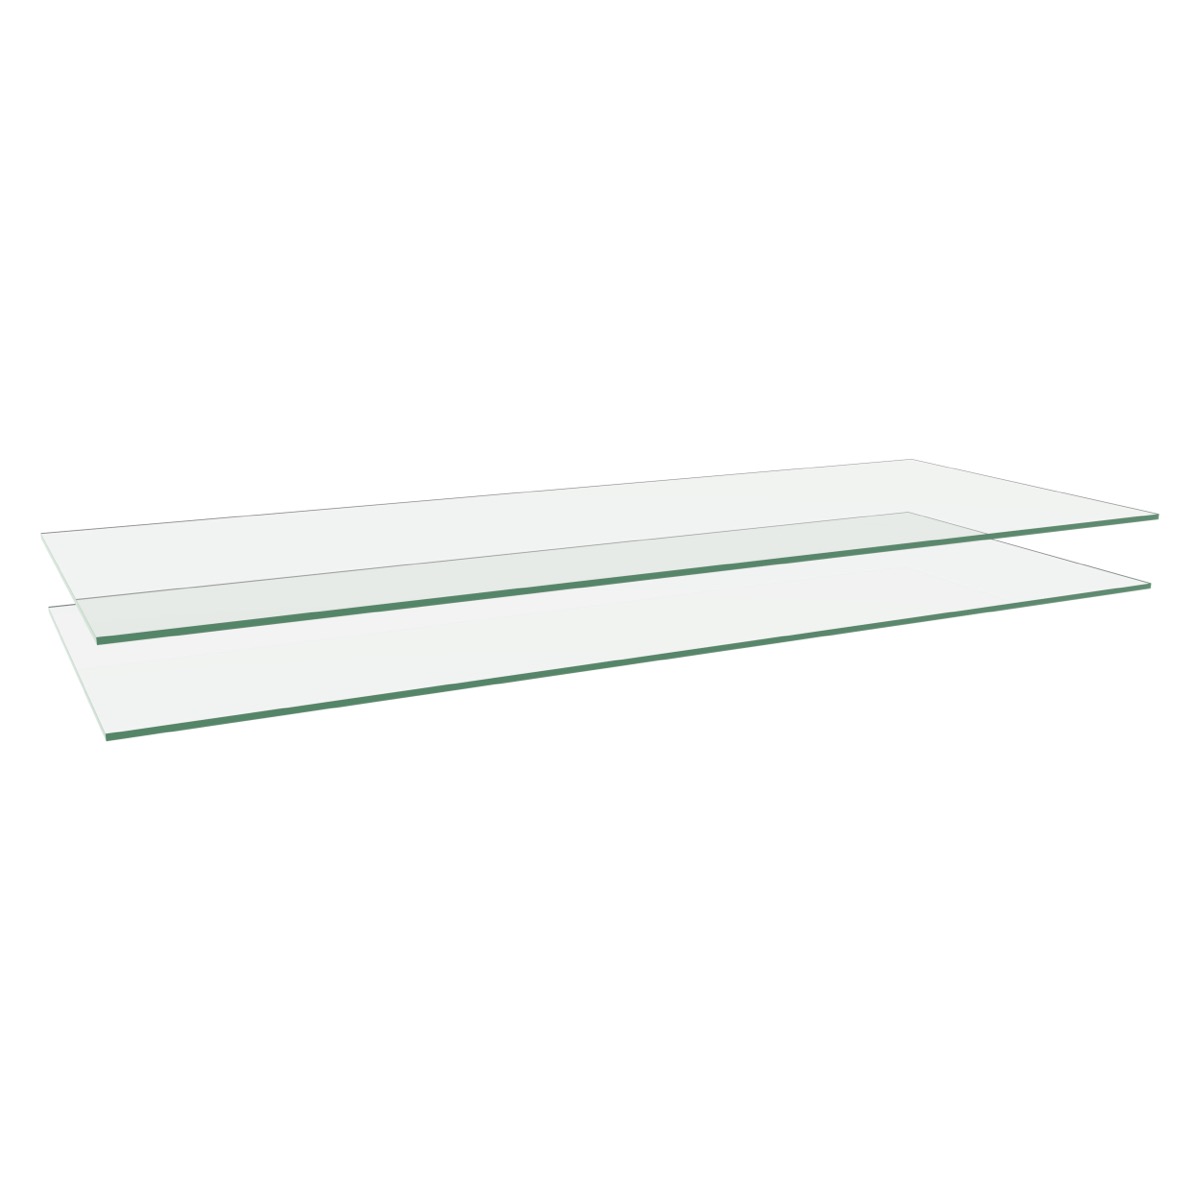 36" glass shelf (2 pack) - clear